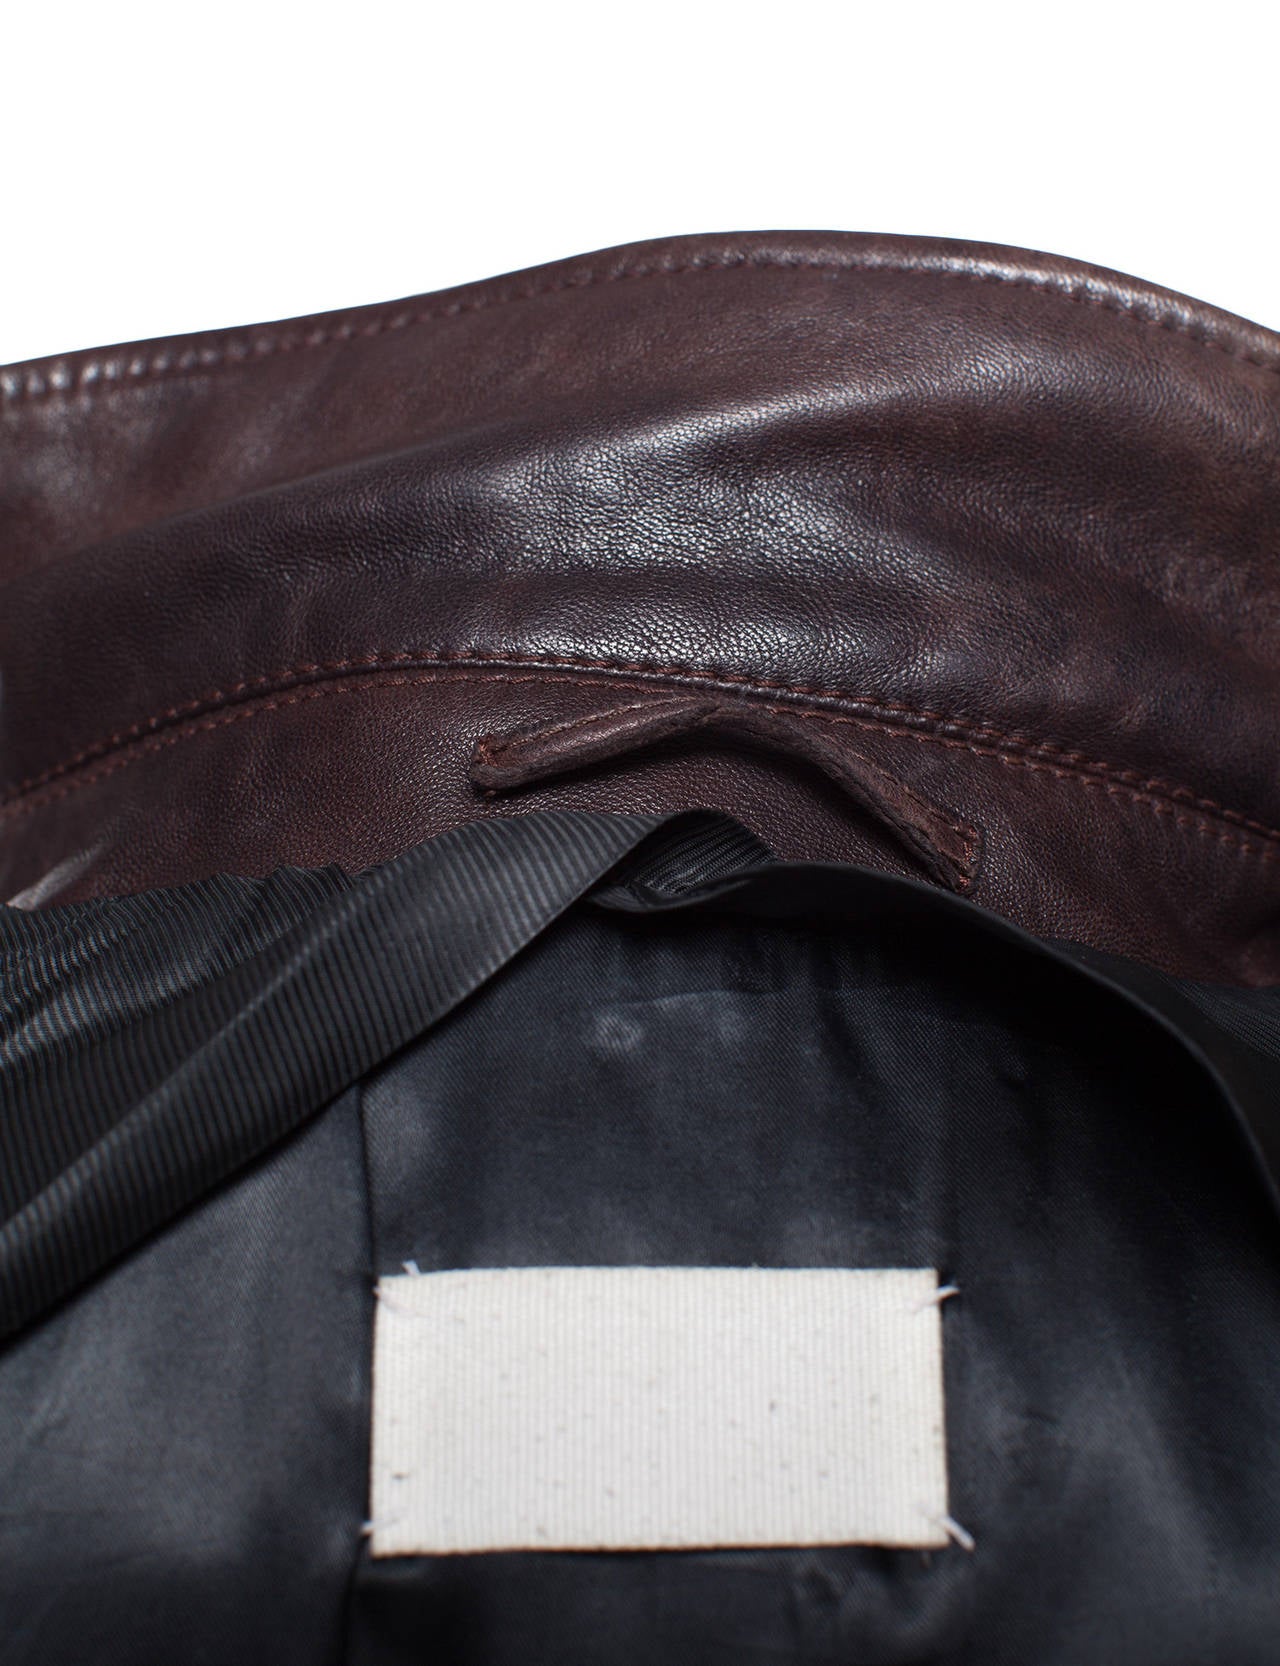 Martin Margiela Vintage Blouson Leather Jacket FW'04, Sz. S For Sale 4